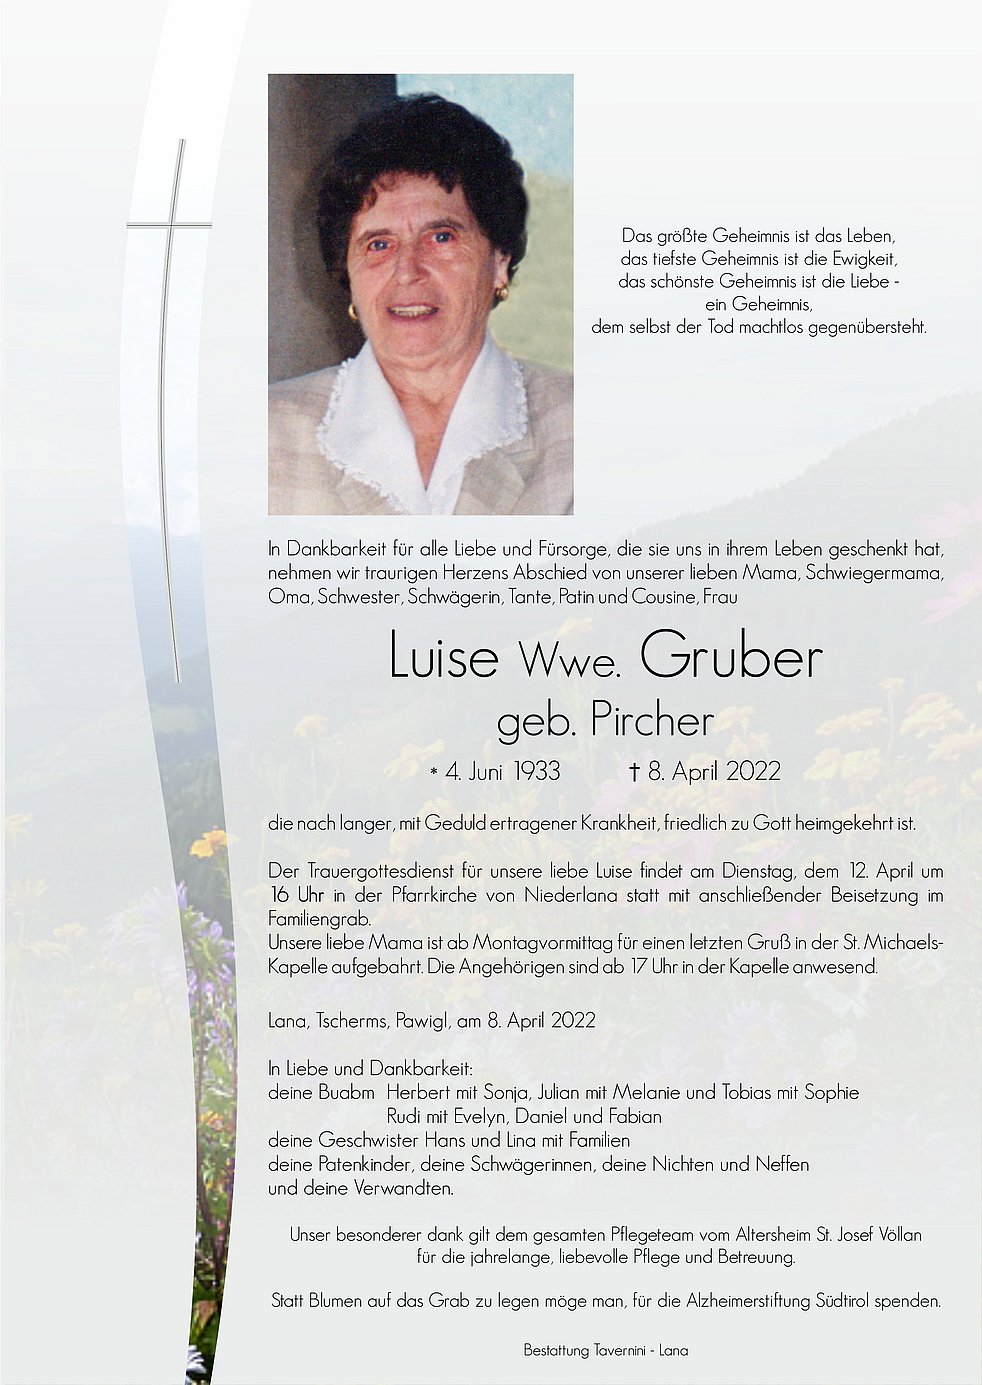 Luise Wwe. Gruber aus Lana - TrauerHilfe.it - das Südtiroler Gedenkportal